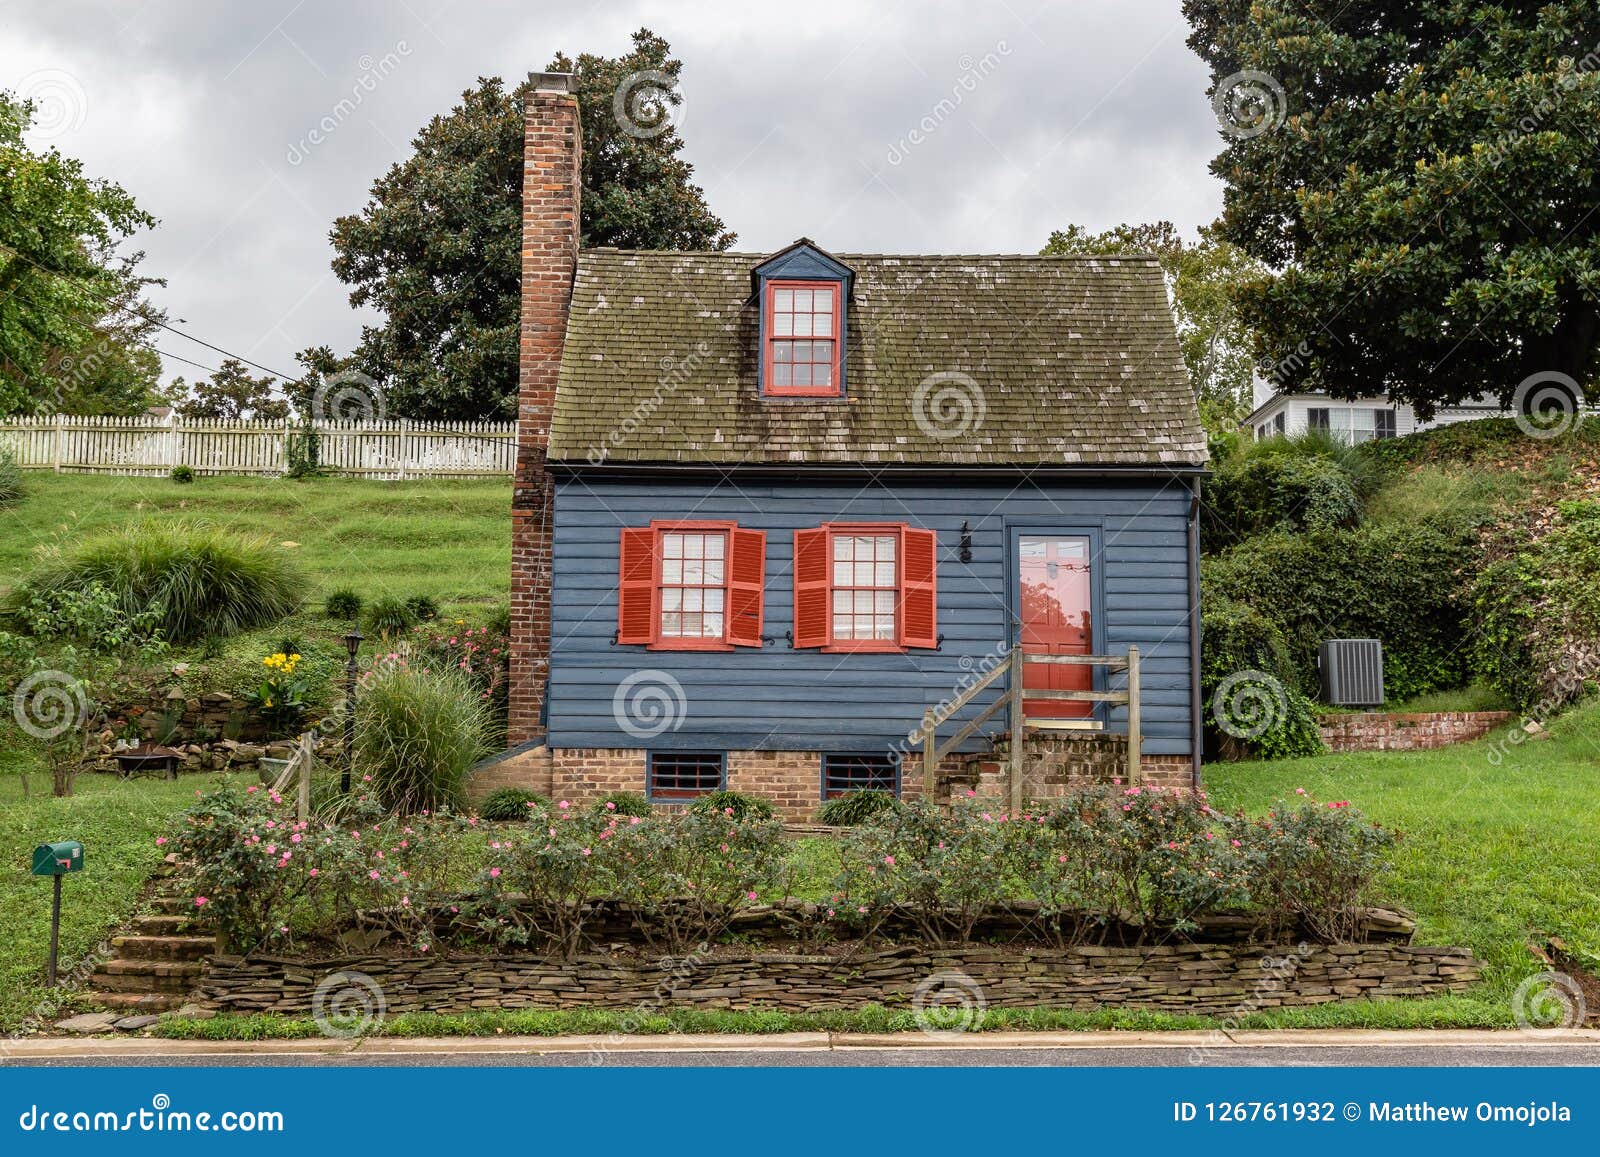 180,182 Beautiful Small House Stock Photos - Free & Royalty-Free ...